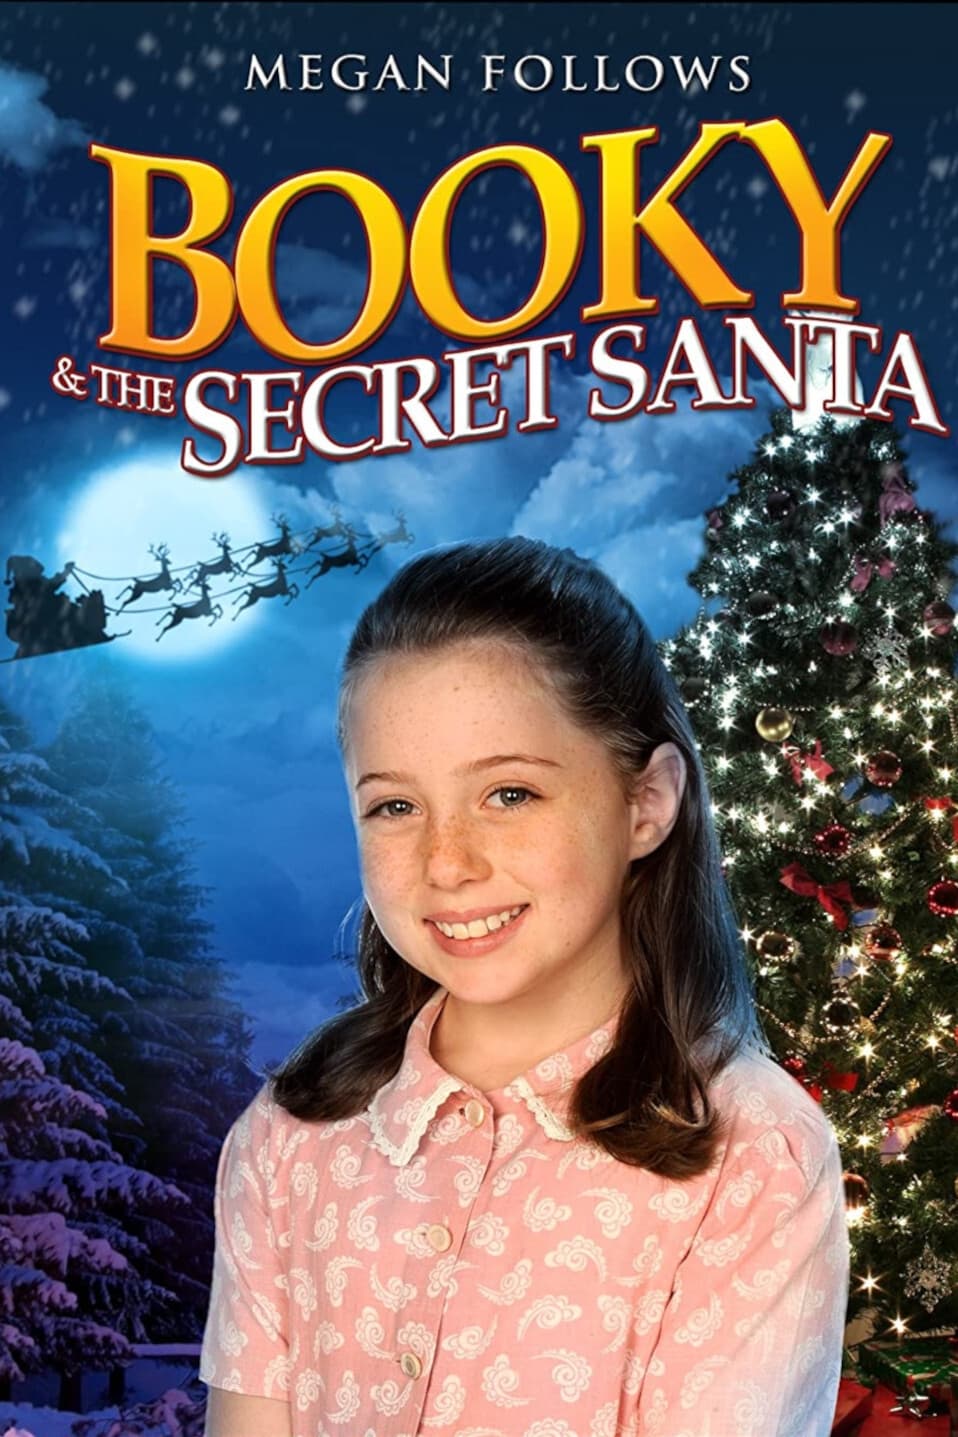 Booky & the Secret Santa film